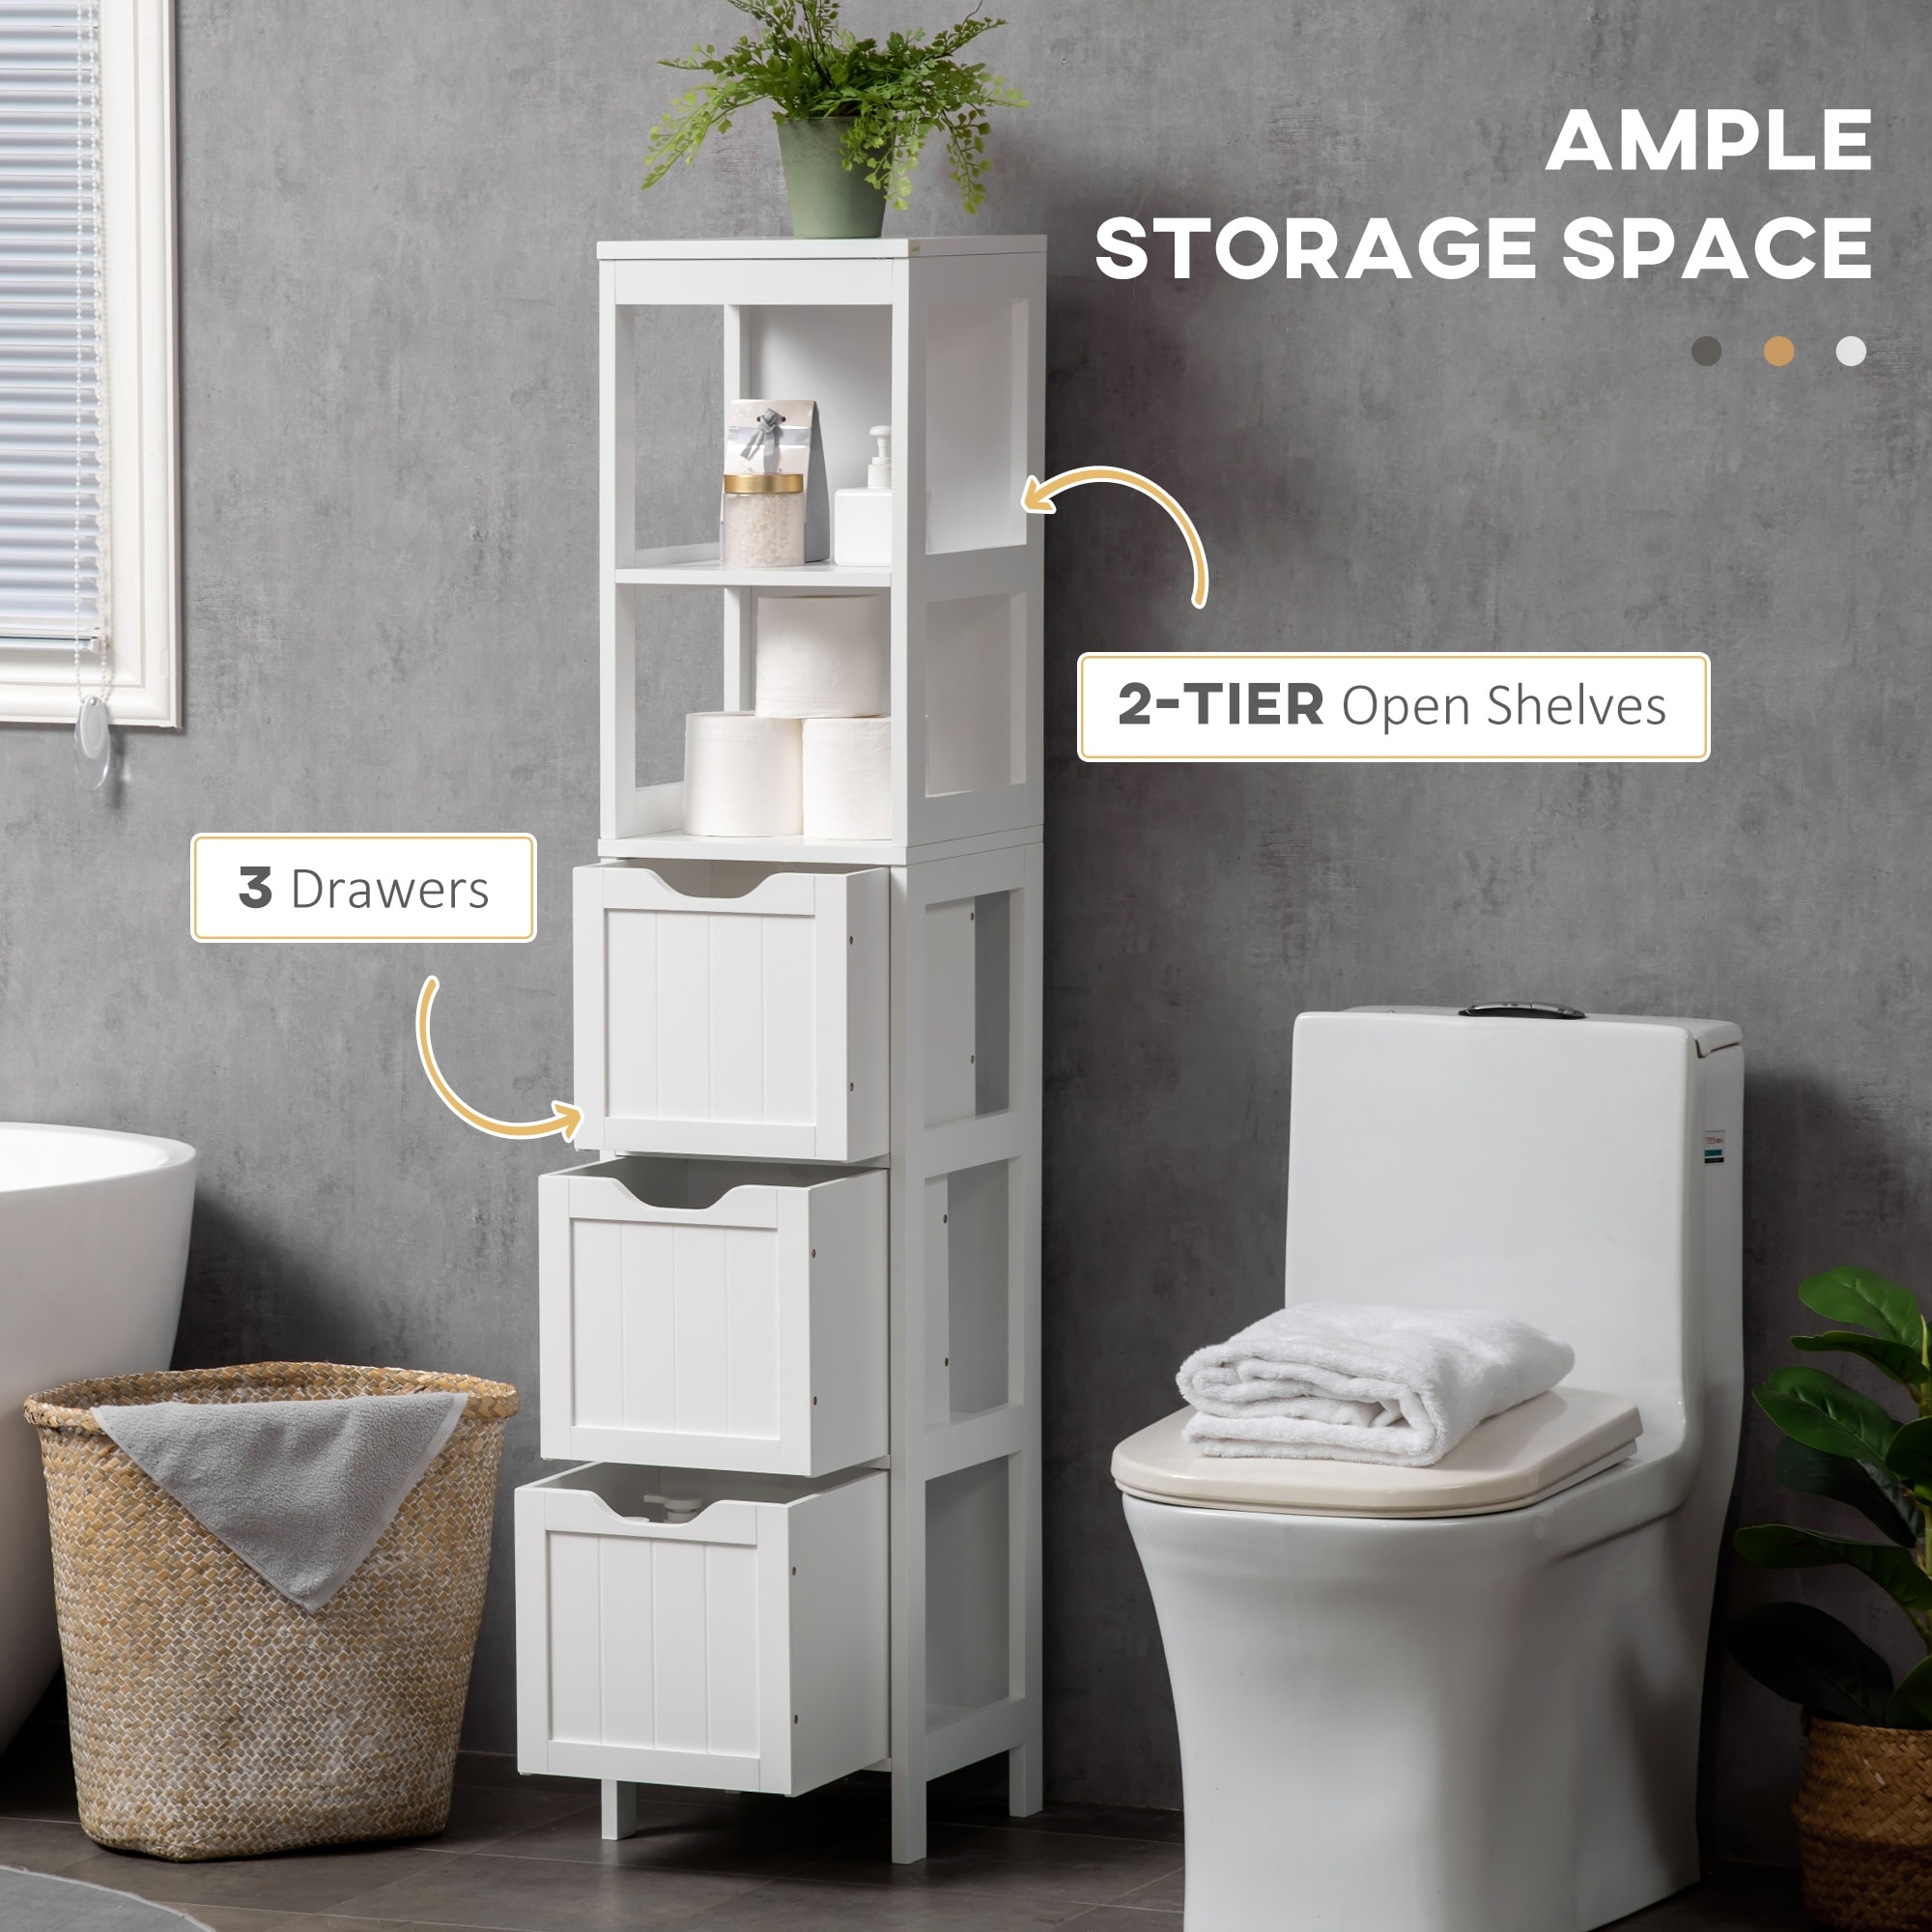 https://ak1.ostkcdn.com/images/products/is/images/direct/5e668ccd92f78a2420b12ecbf34180d56d5542b4/kleankin-Narrow-Bathroom-Cabinet-with-3-Drawers-and-2-Tier-Shelf%2C-Tall-Cupboard-Freestanding-Linen-Towel%2C-Slim-Corner-Organizer.jpg